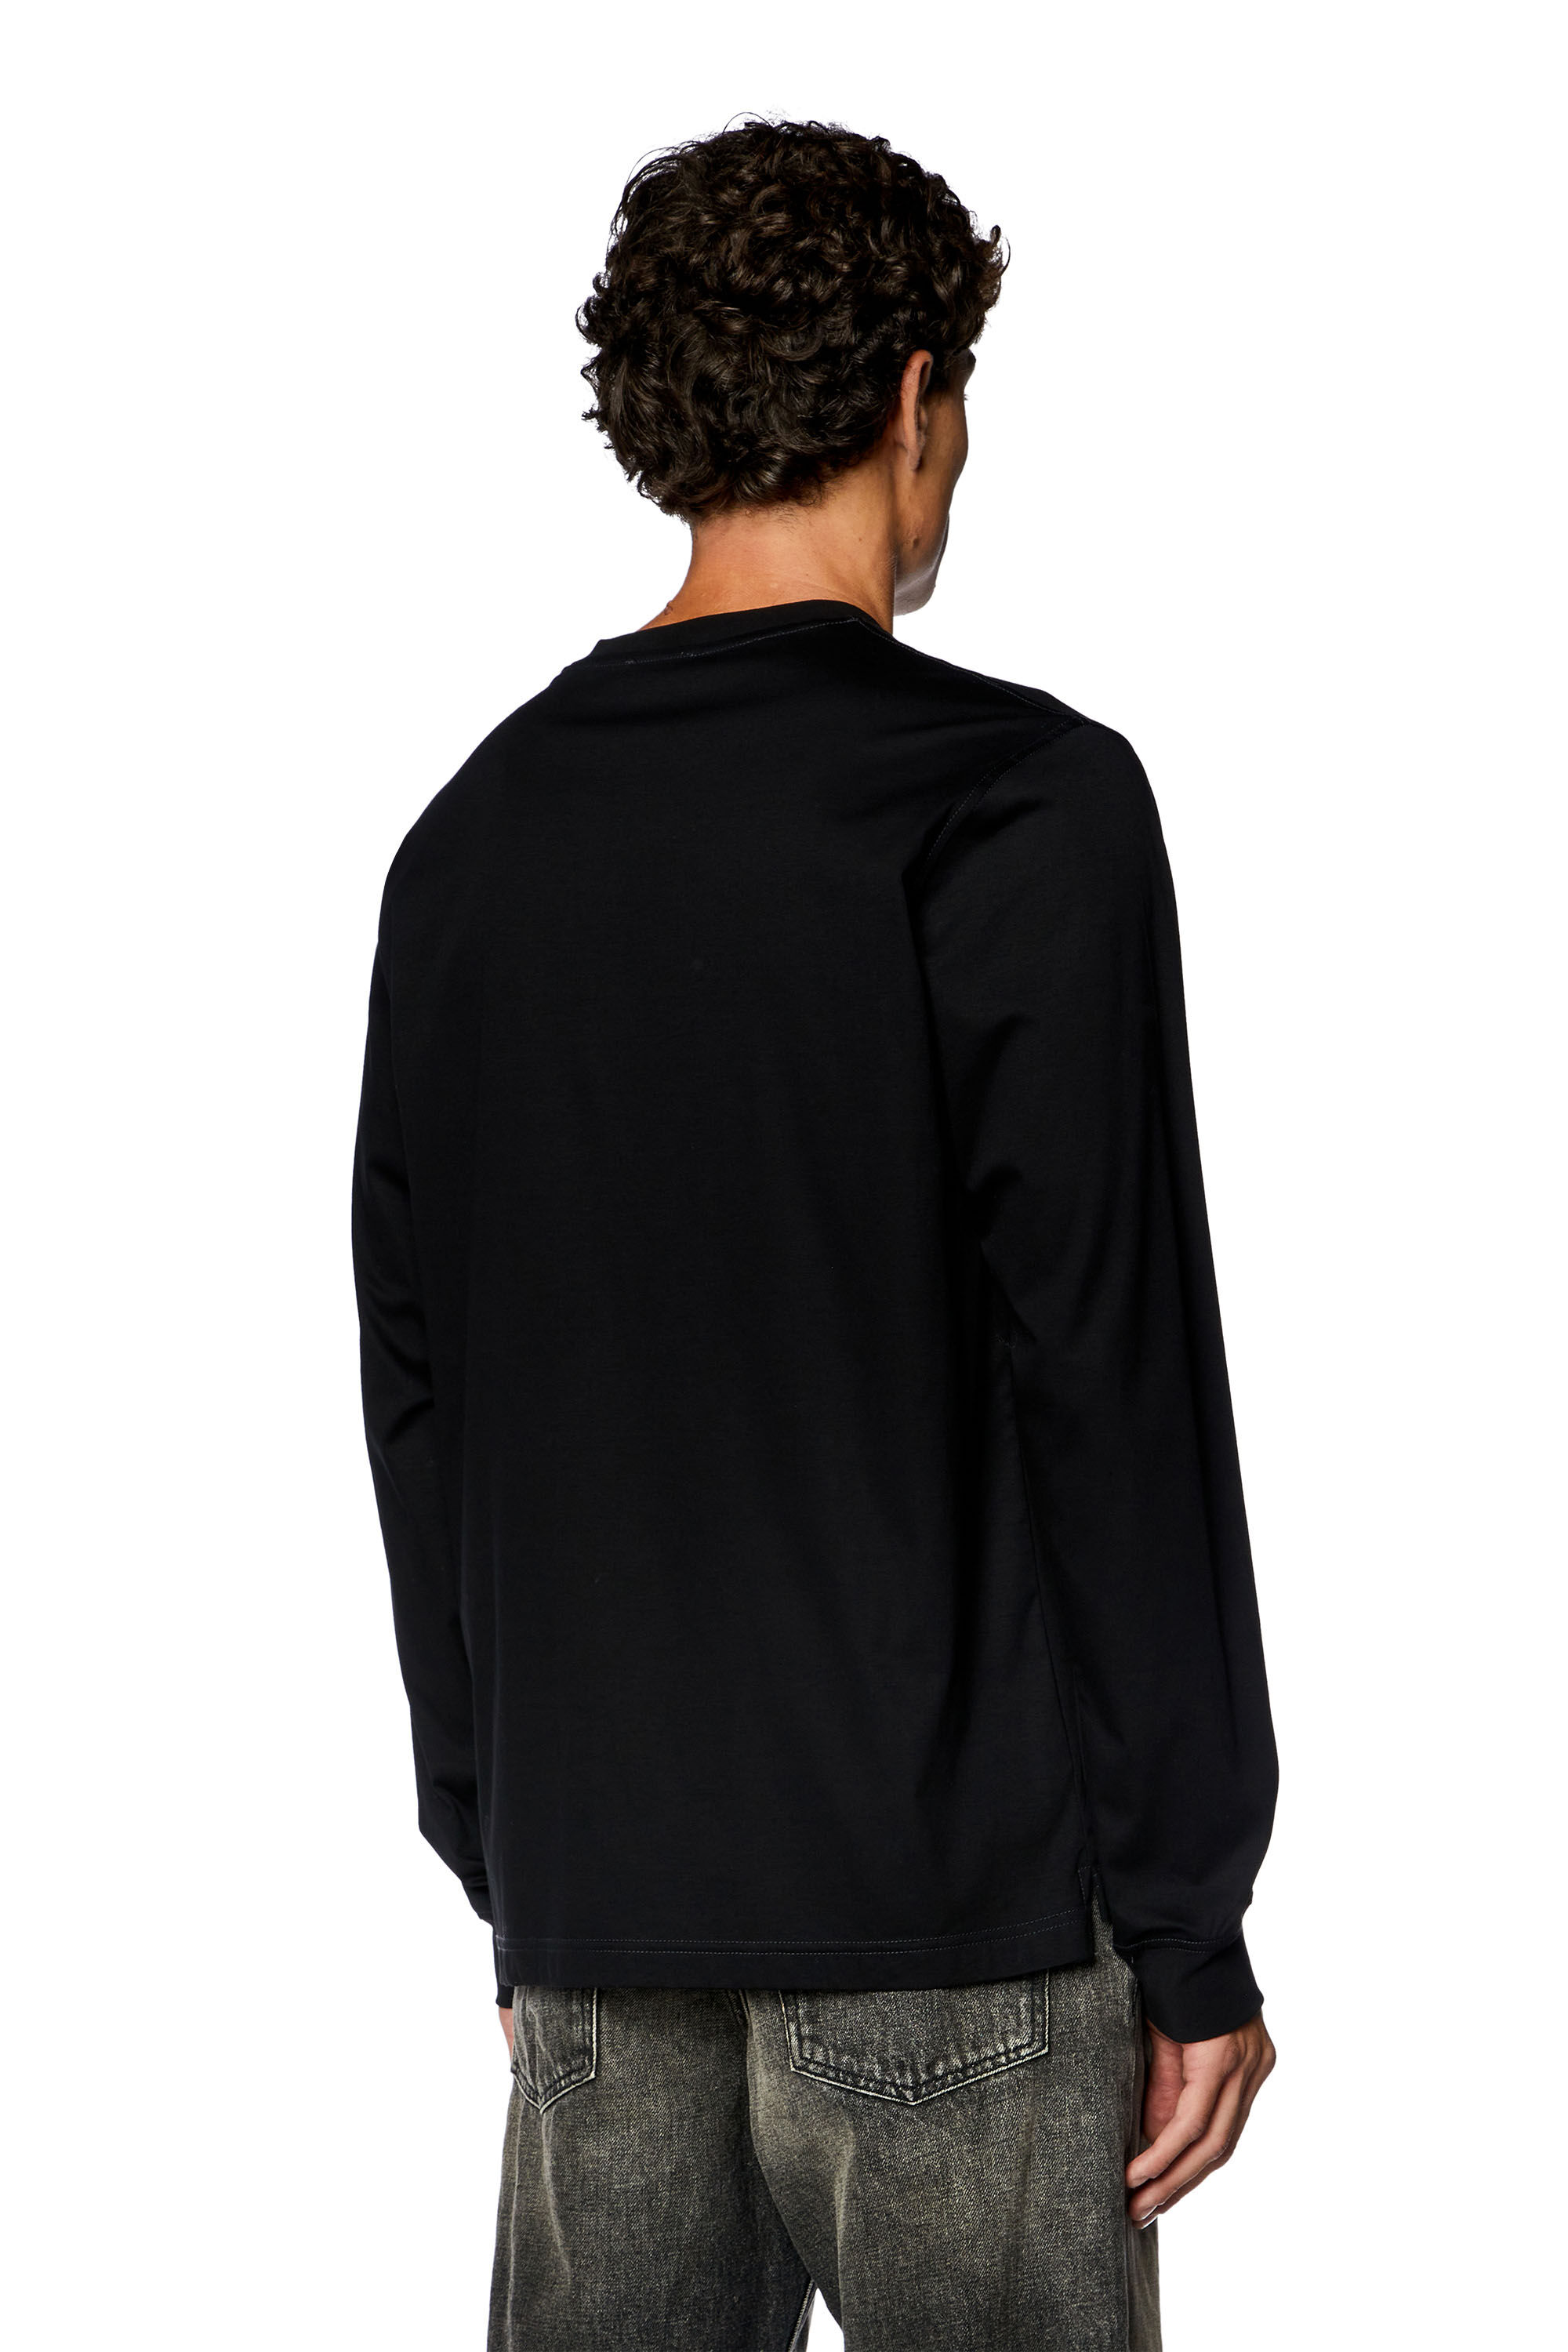 Men's Long-sleeve T-shirt with high-density prints | Black | Diesel